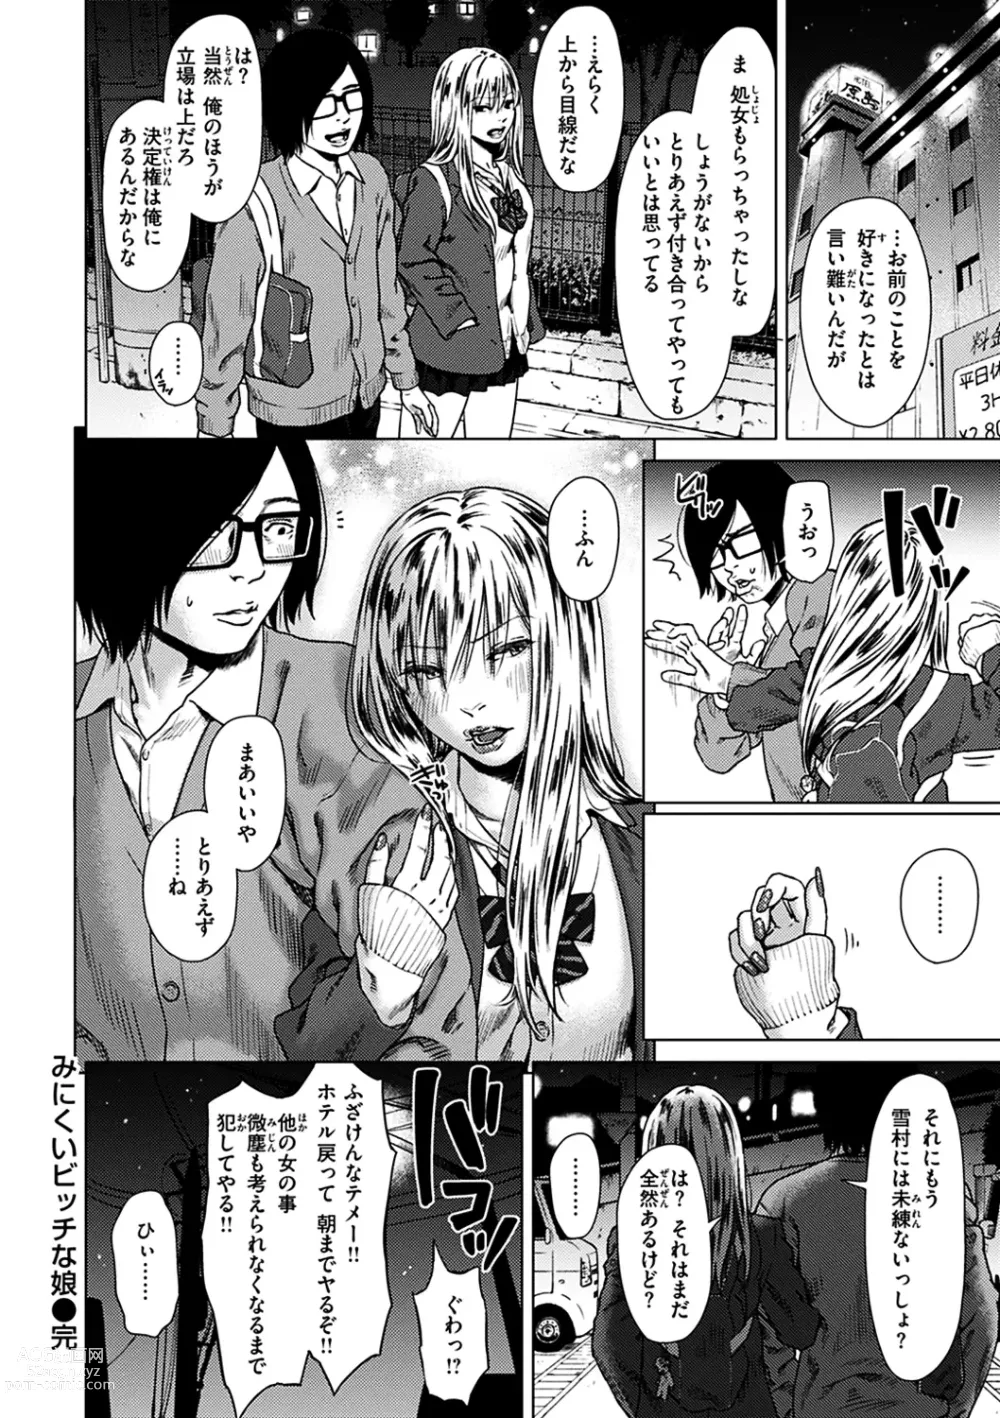 Page 158 of manga Kimi dake ni - I Only Love You...